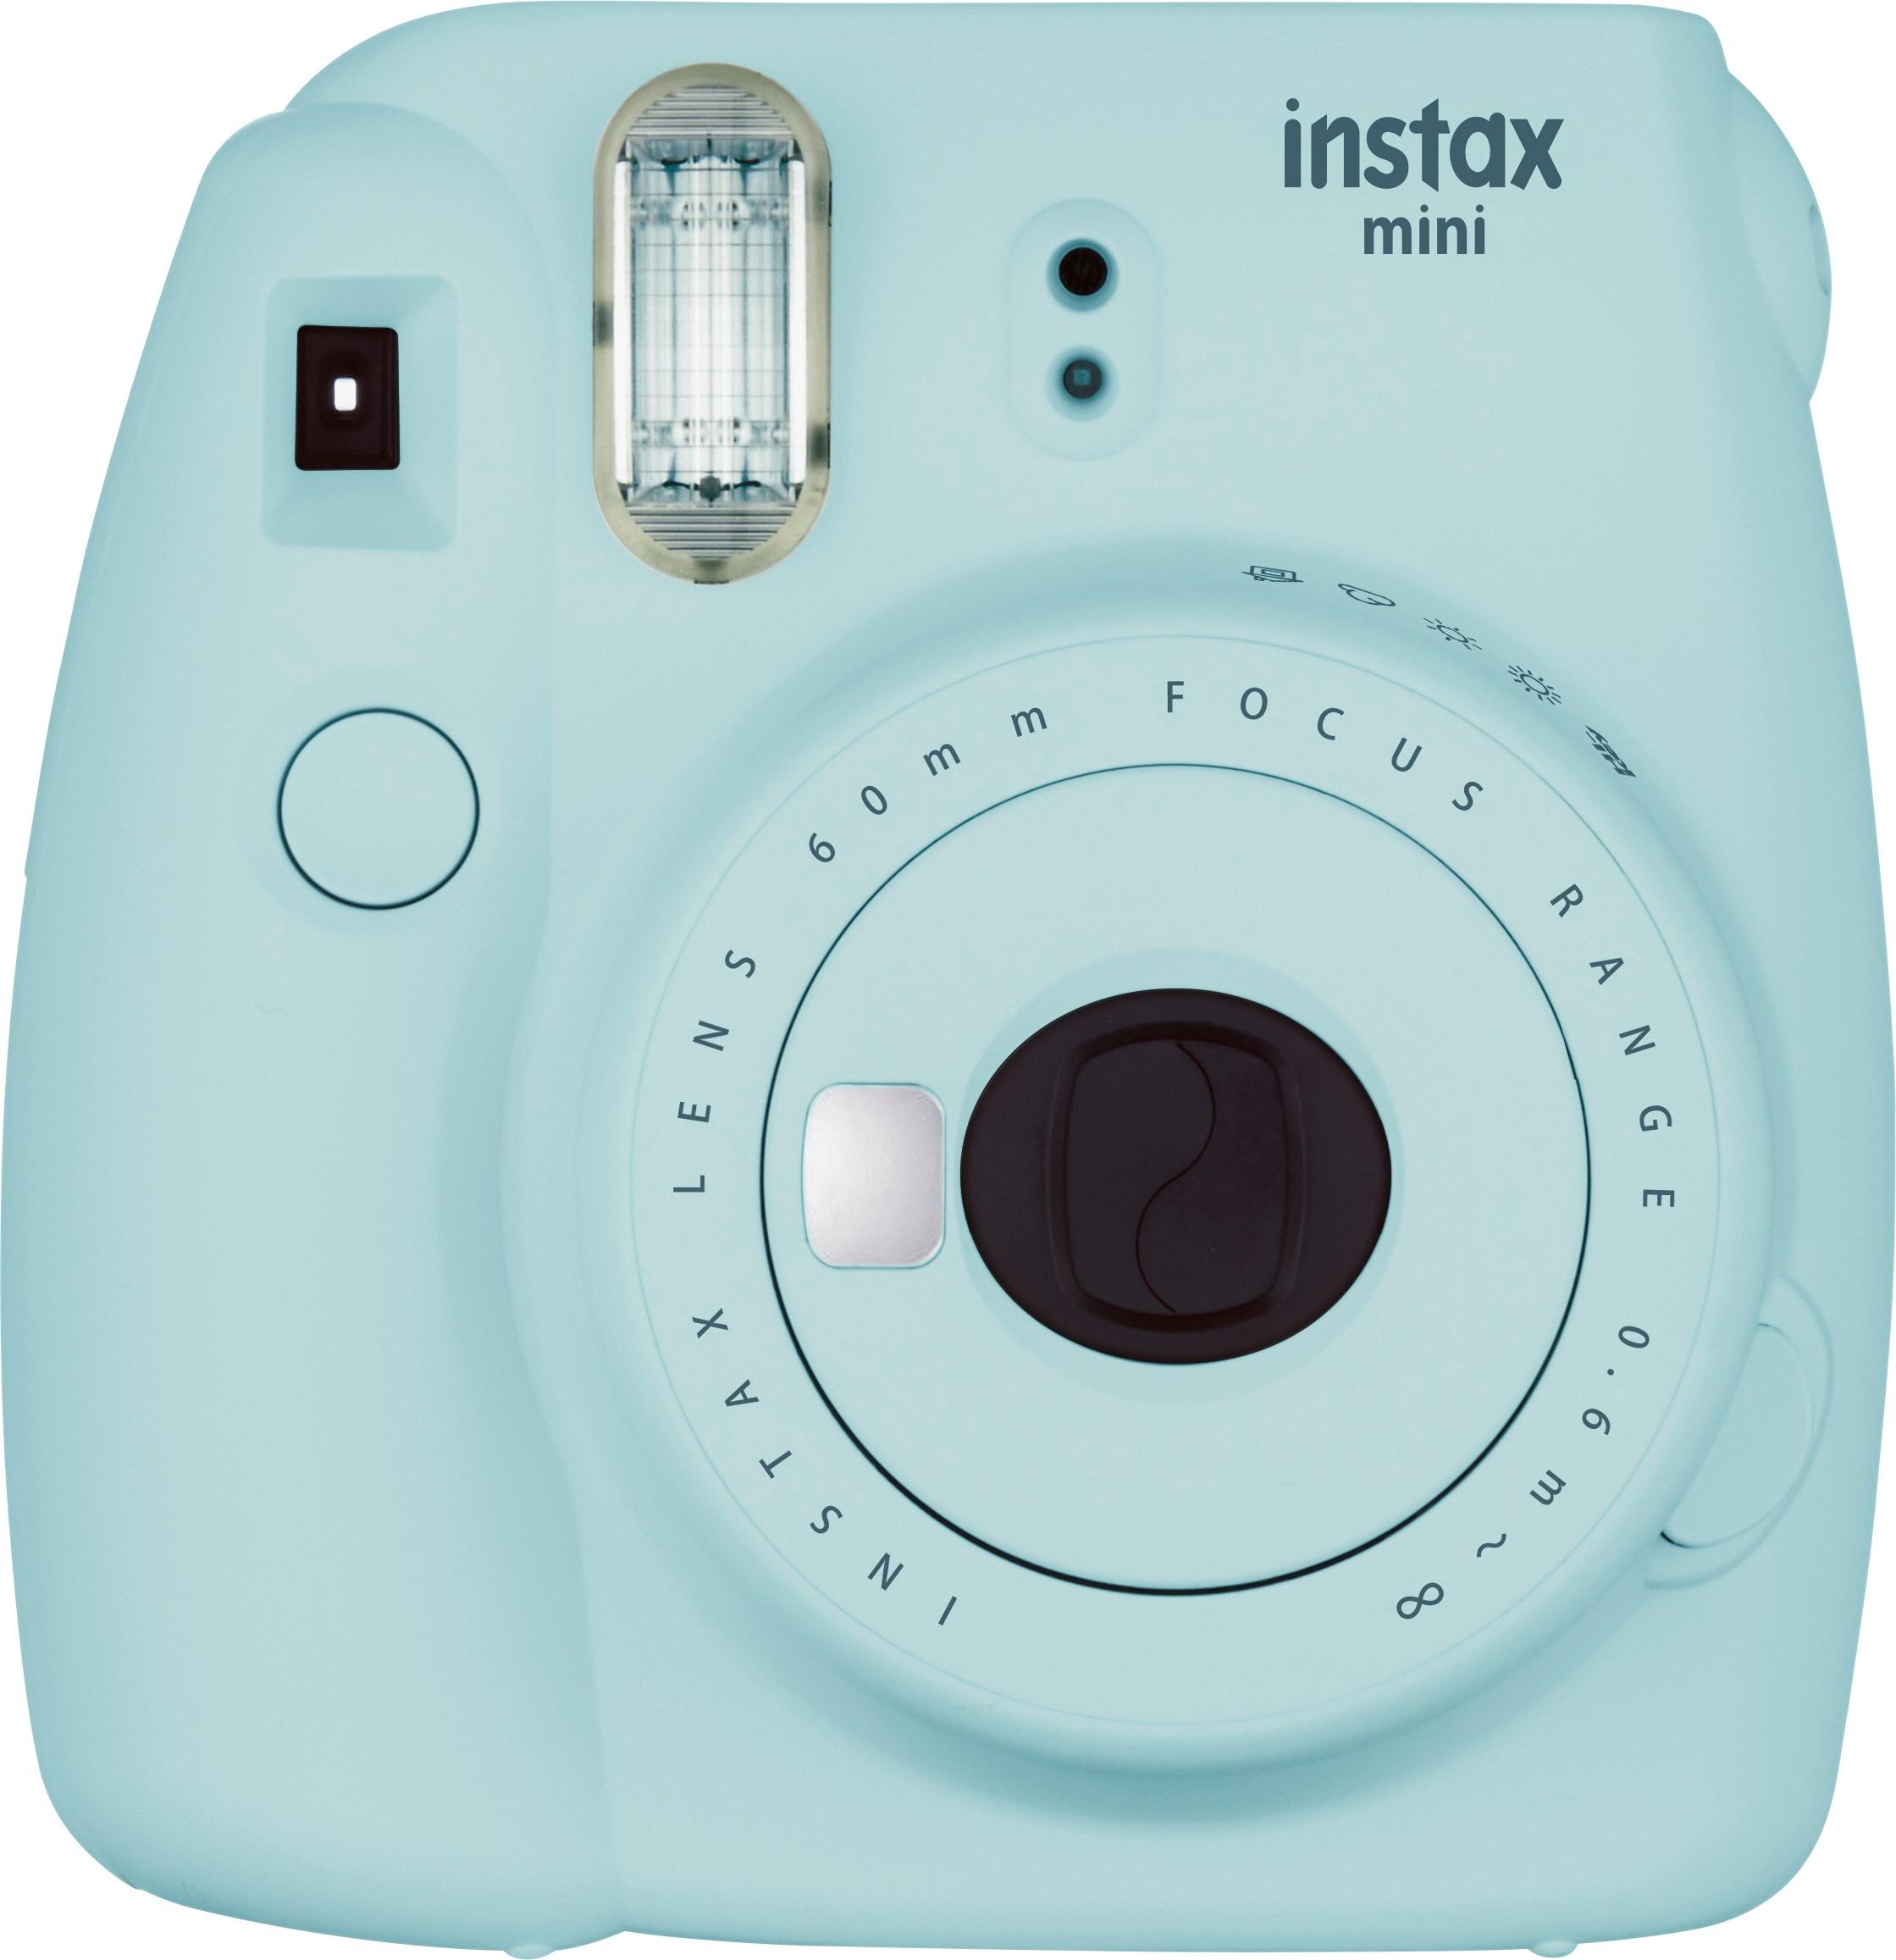 werk glans Ik wil niet Best Buy: Fujifilm instax mini 9 Instant Film Camera Ice Blue 16550643